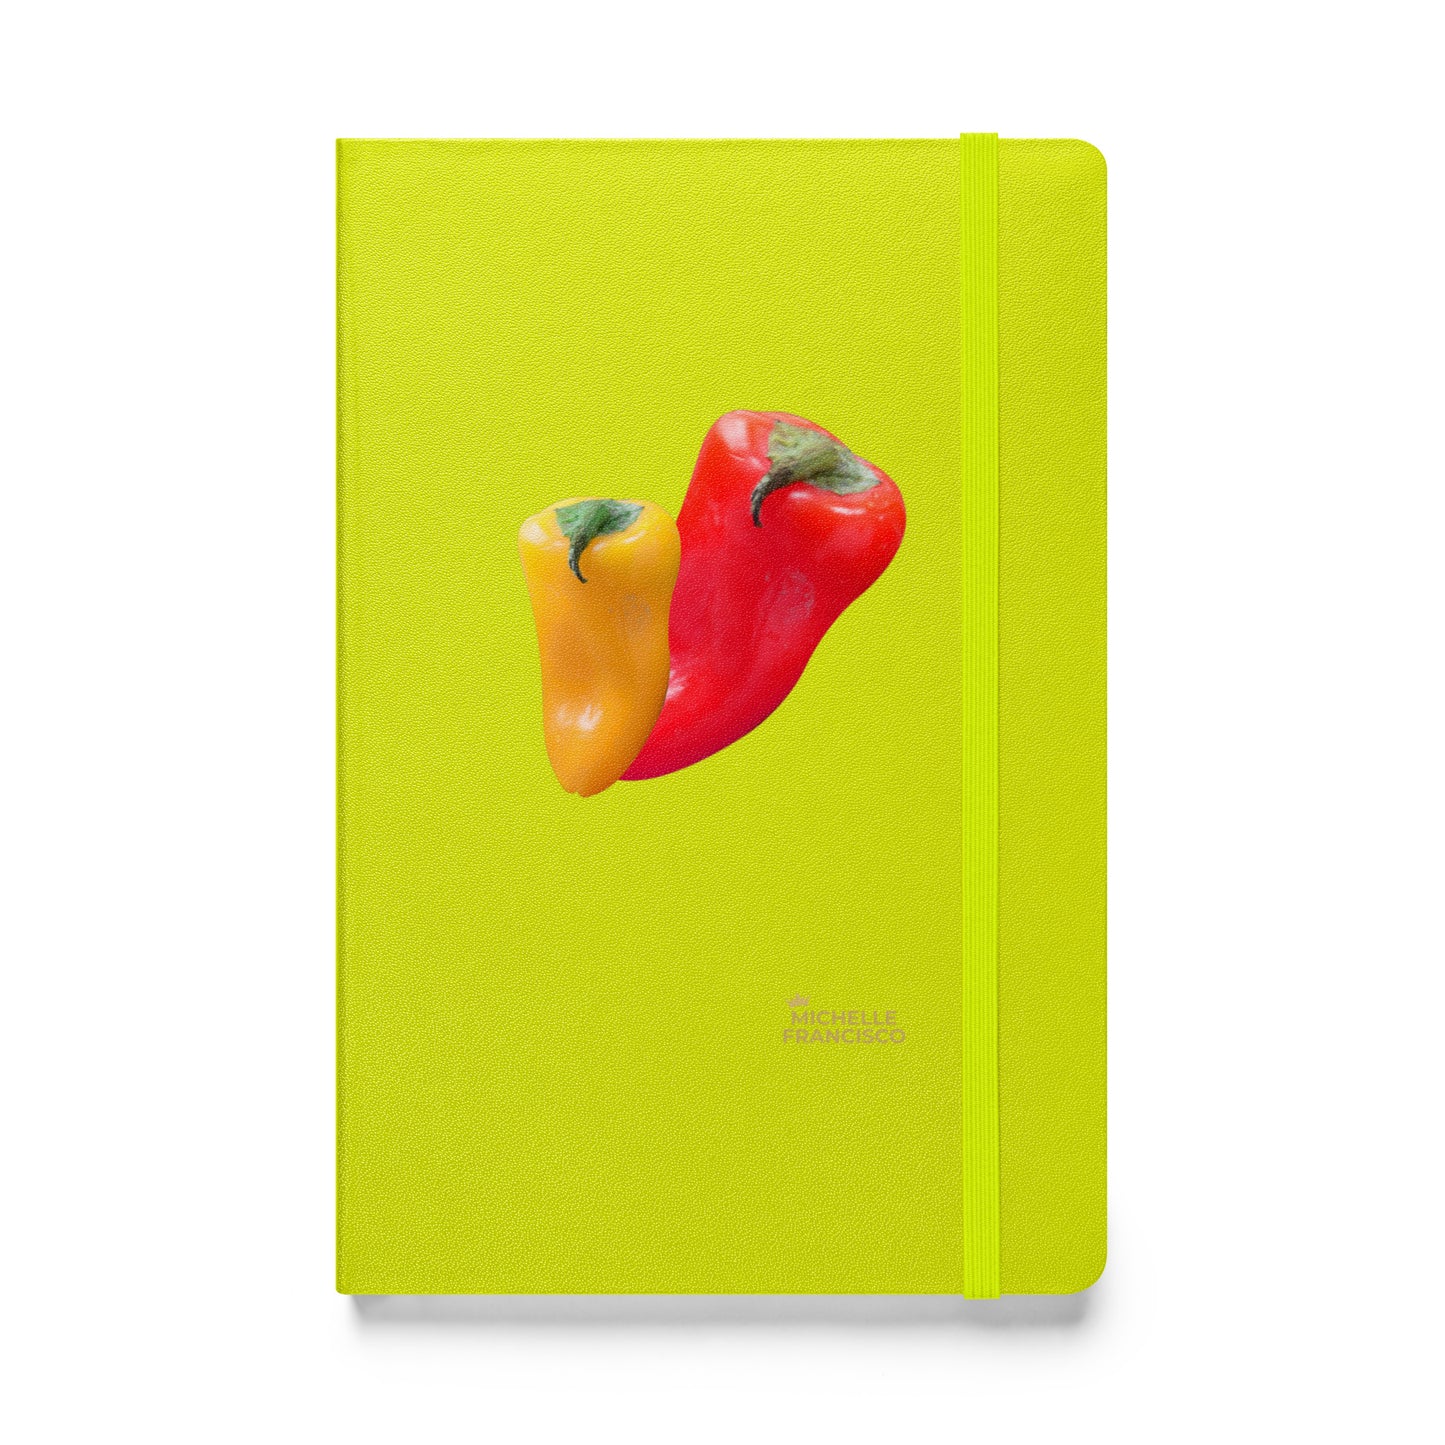 Pepper Hardcover Bound Notebook